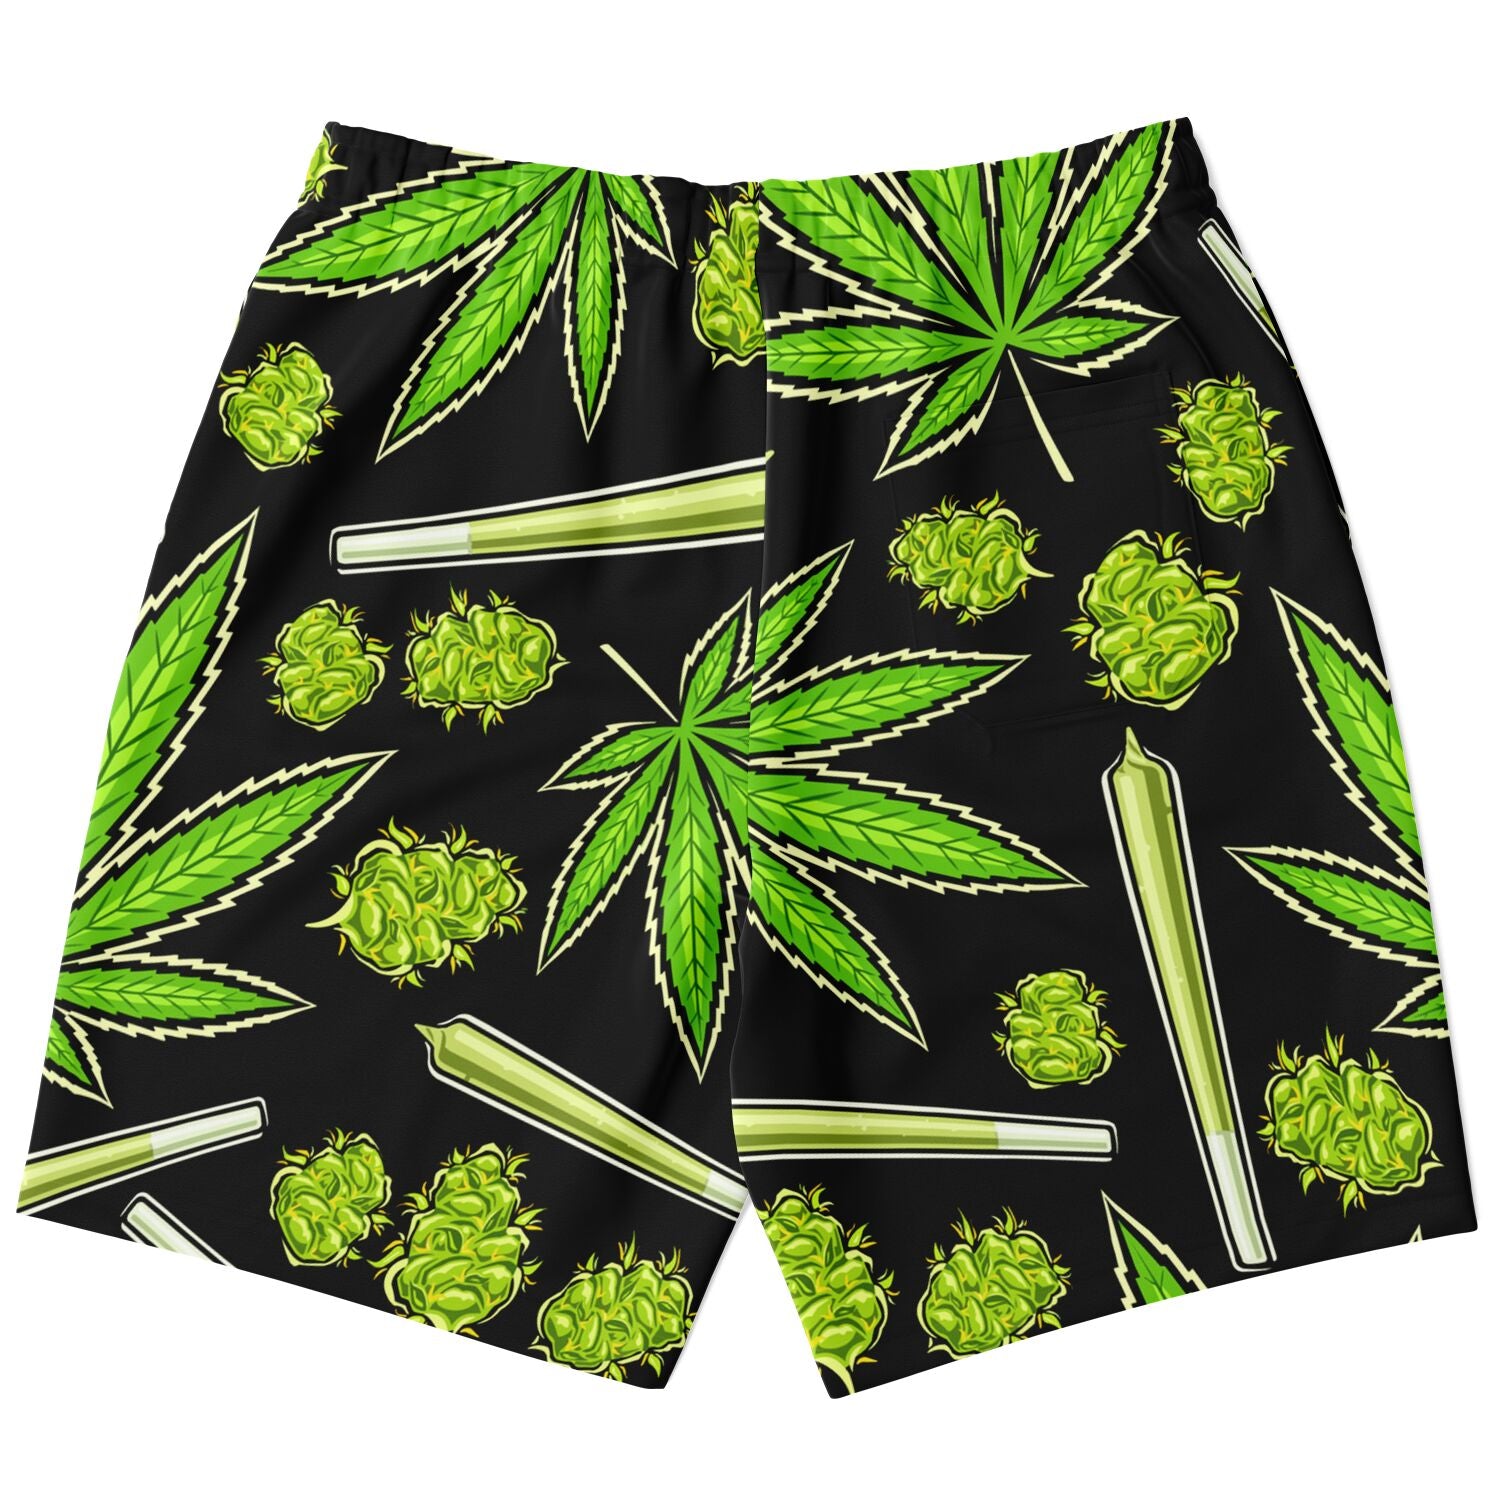 <alt.Leafy Lush Men's Shorts - Taufaa>